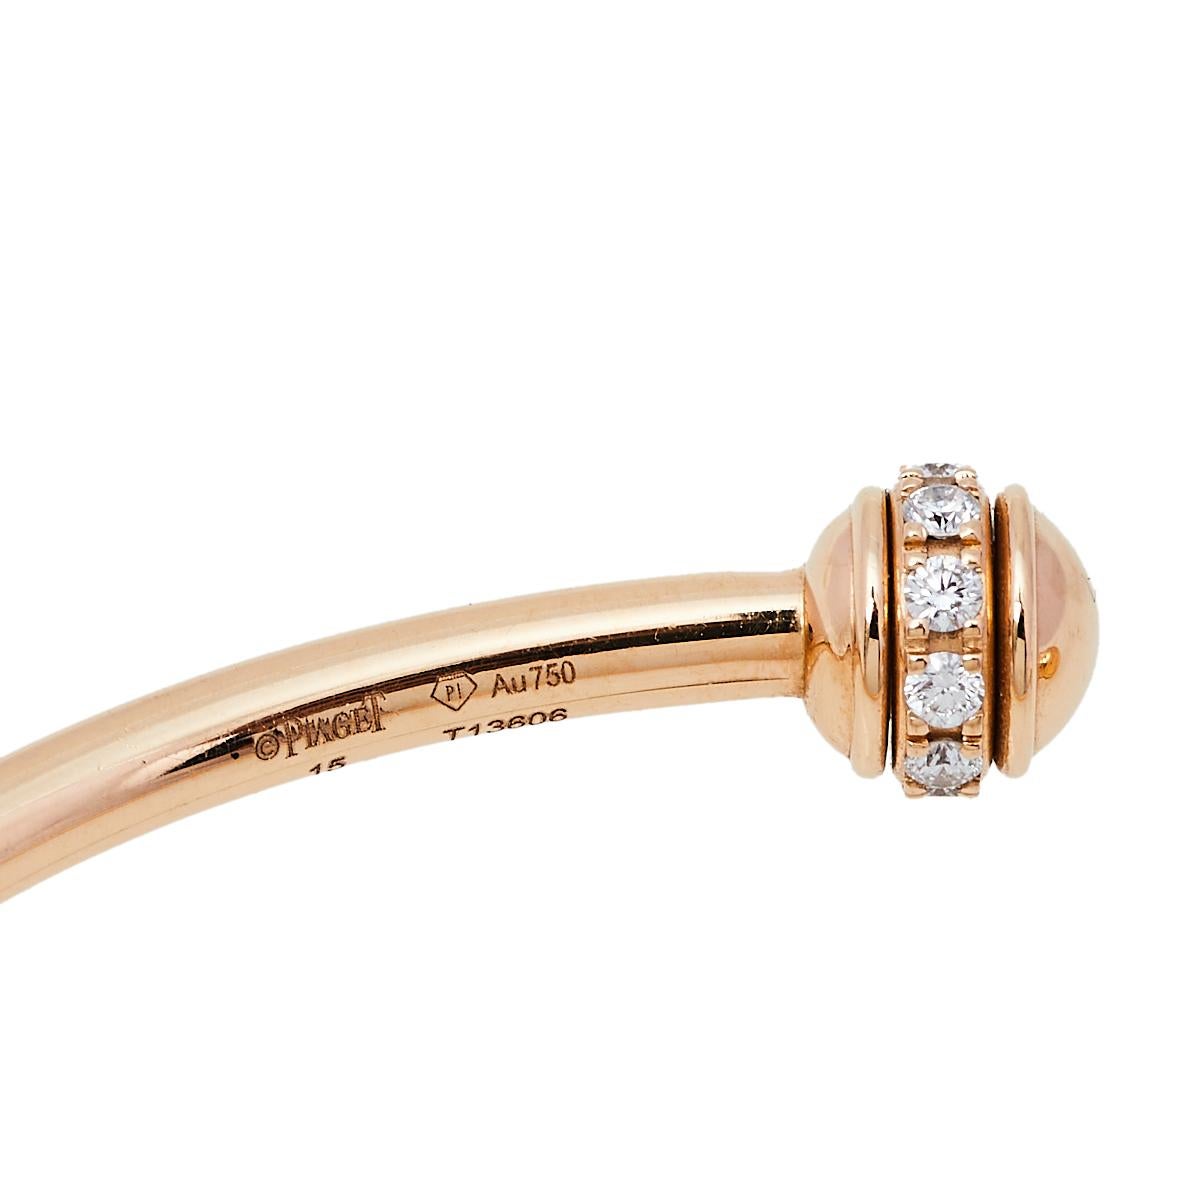 Contemporary Piaget Possession 18K Rose Gold & Diamonds Open Cuff Bracelet